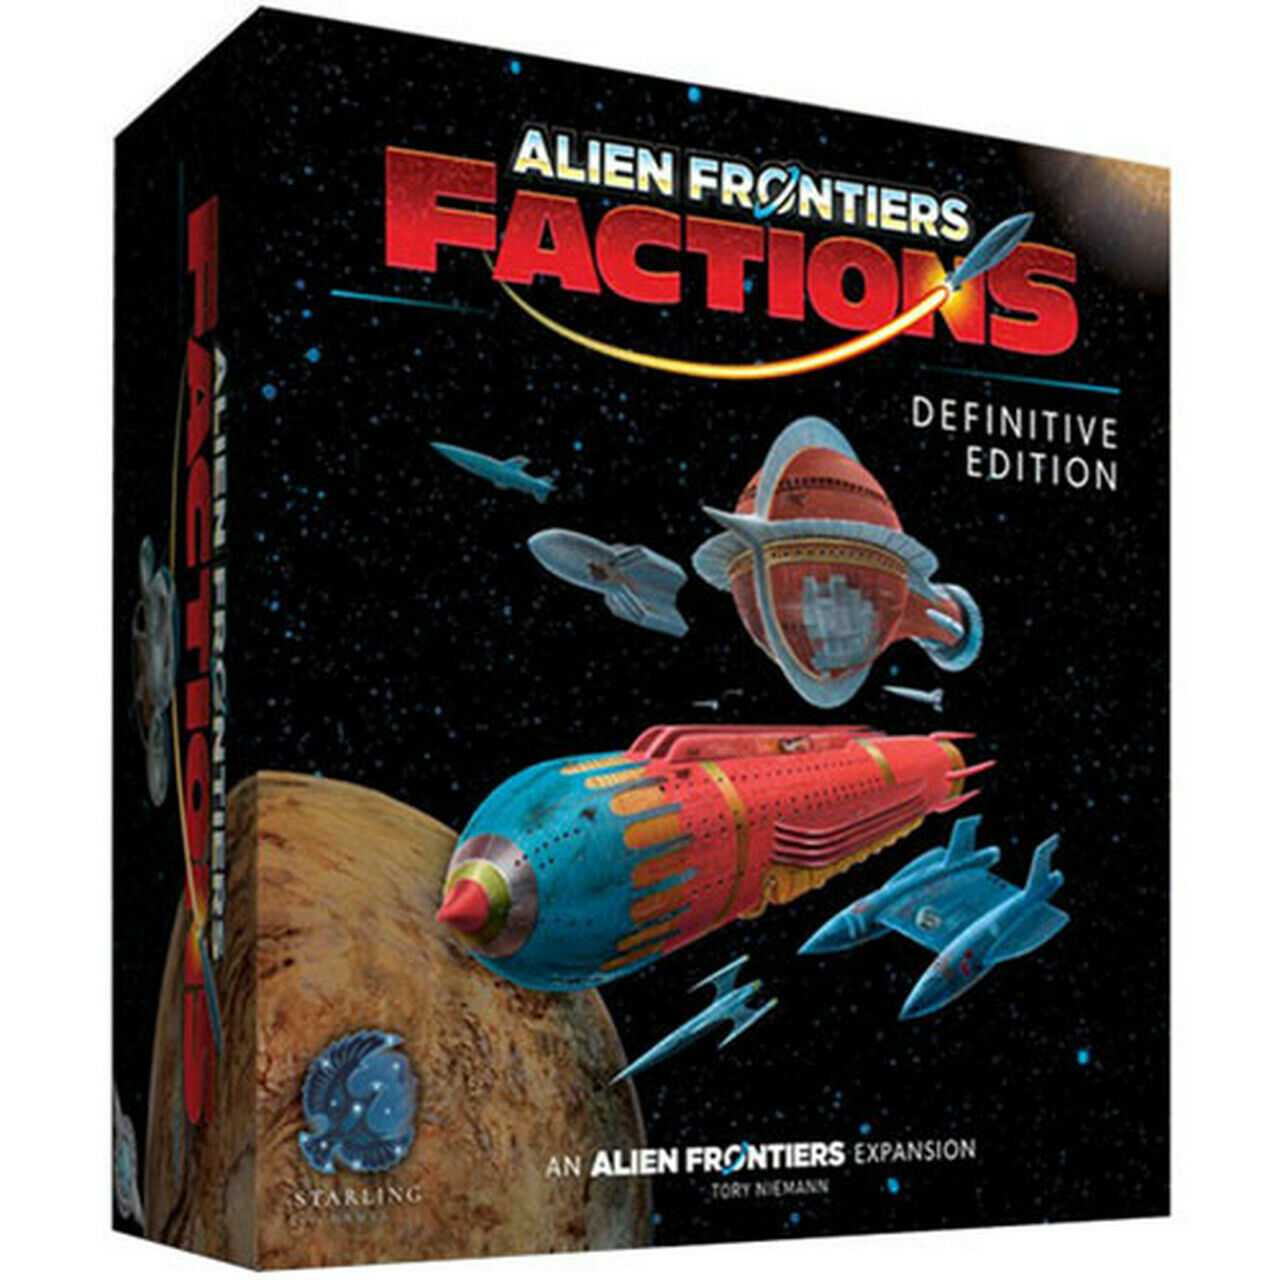 Alien Frontiers Factions, Definitive Edition